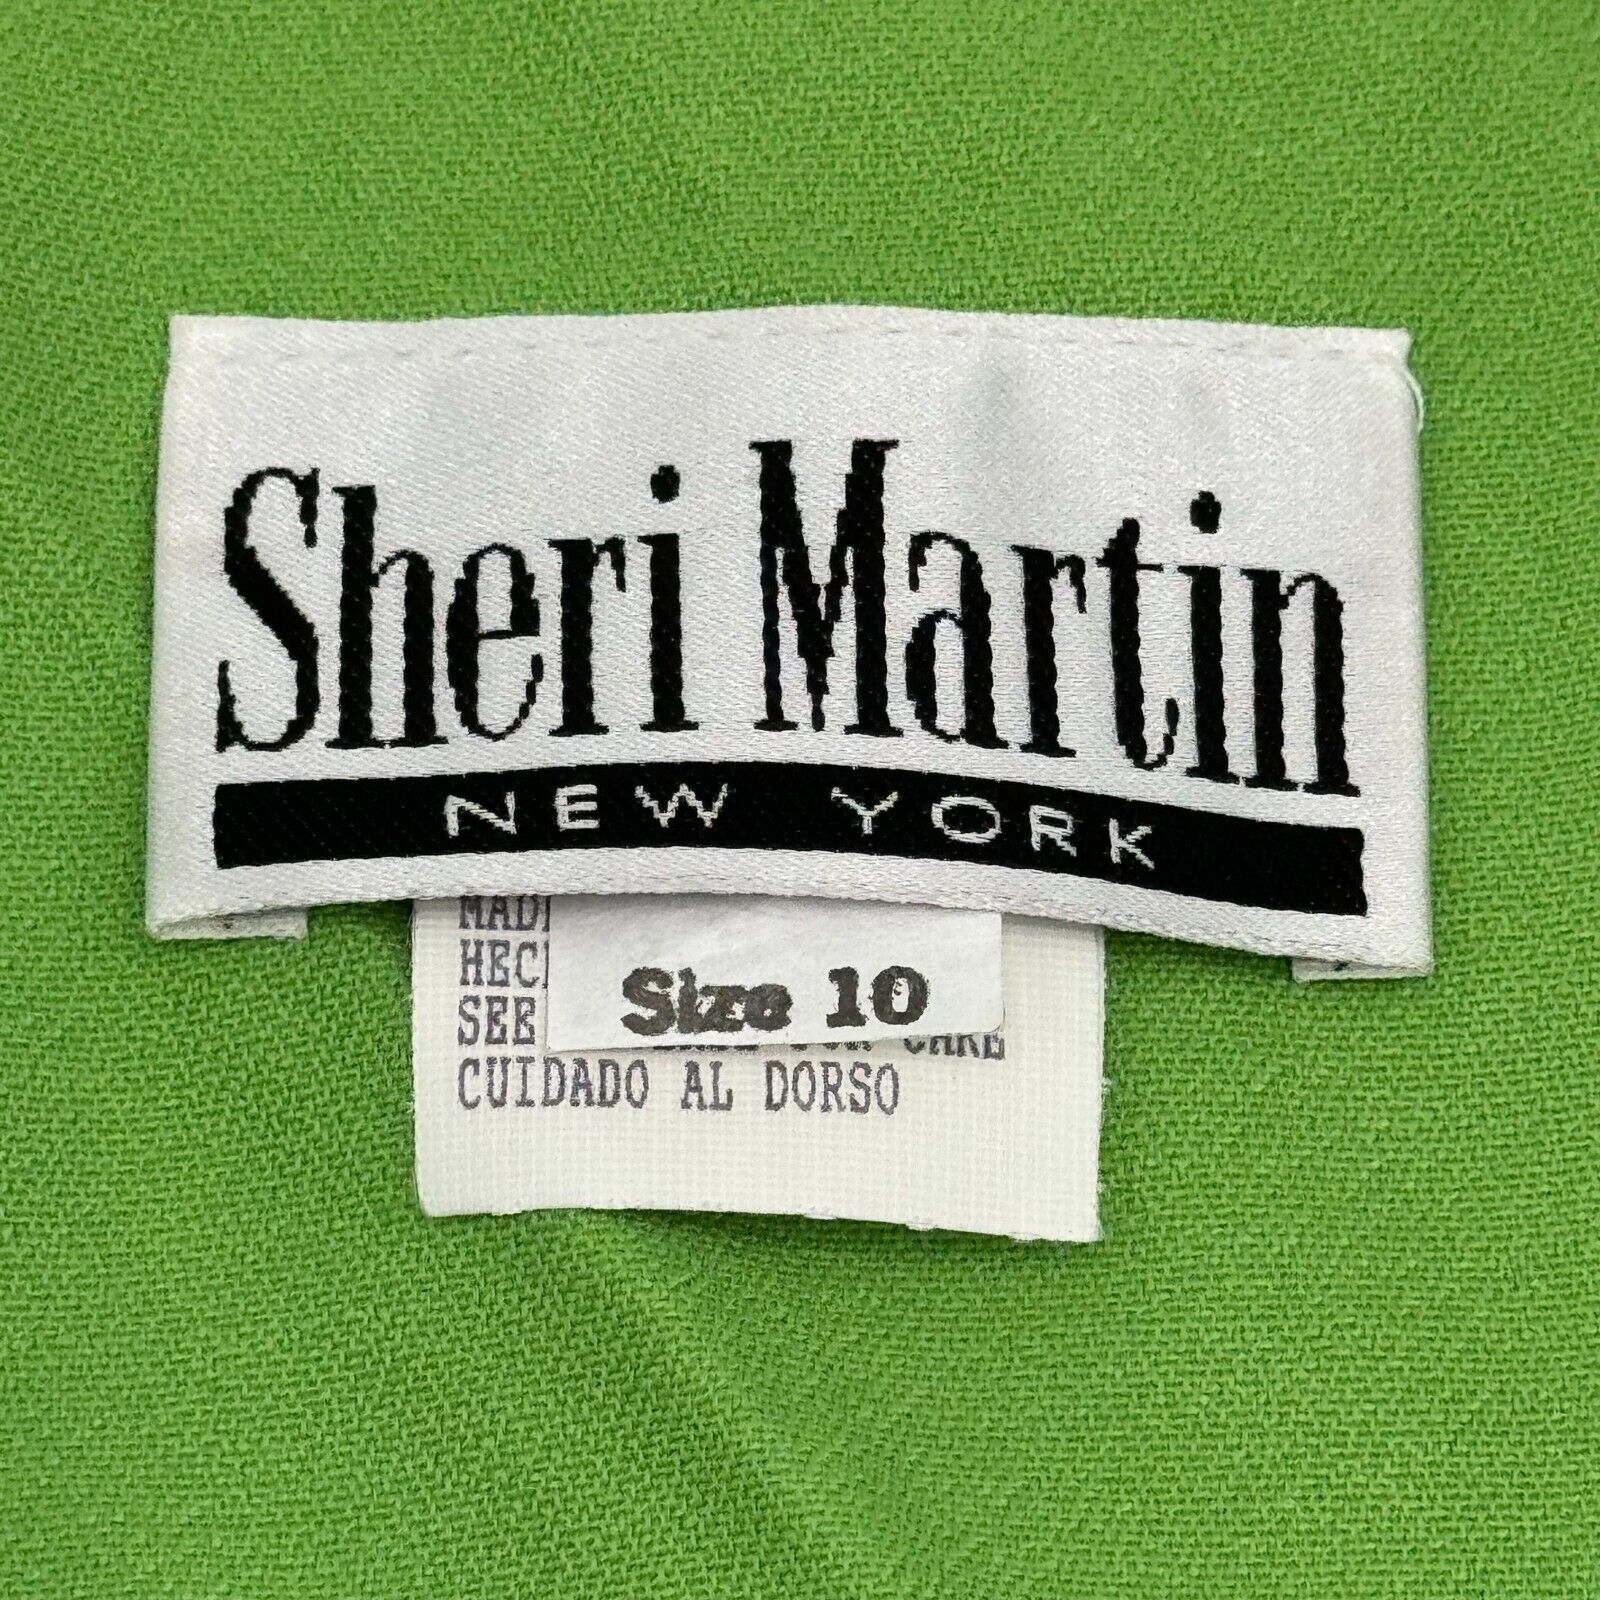 Sheri Martin Shoulder Pad Long Sleeve Zip Crop Top Jacket Womens Size 10 US NWT